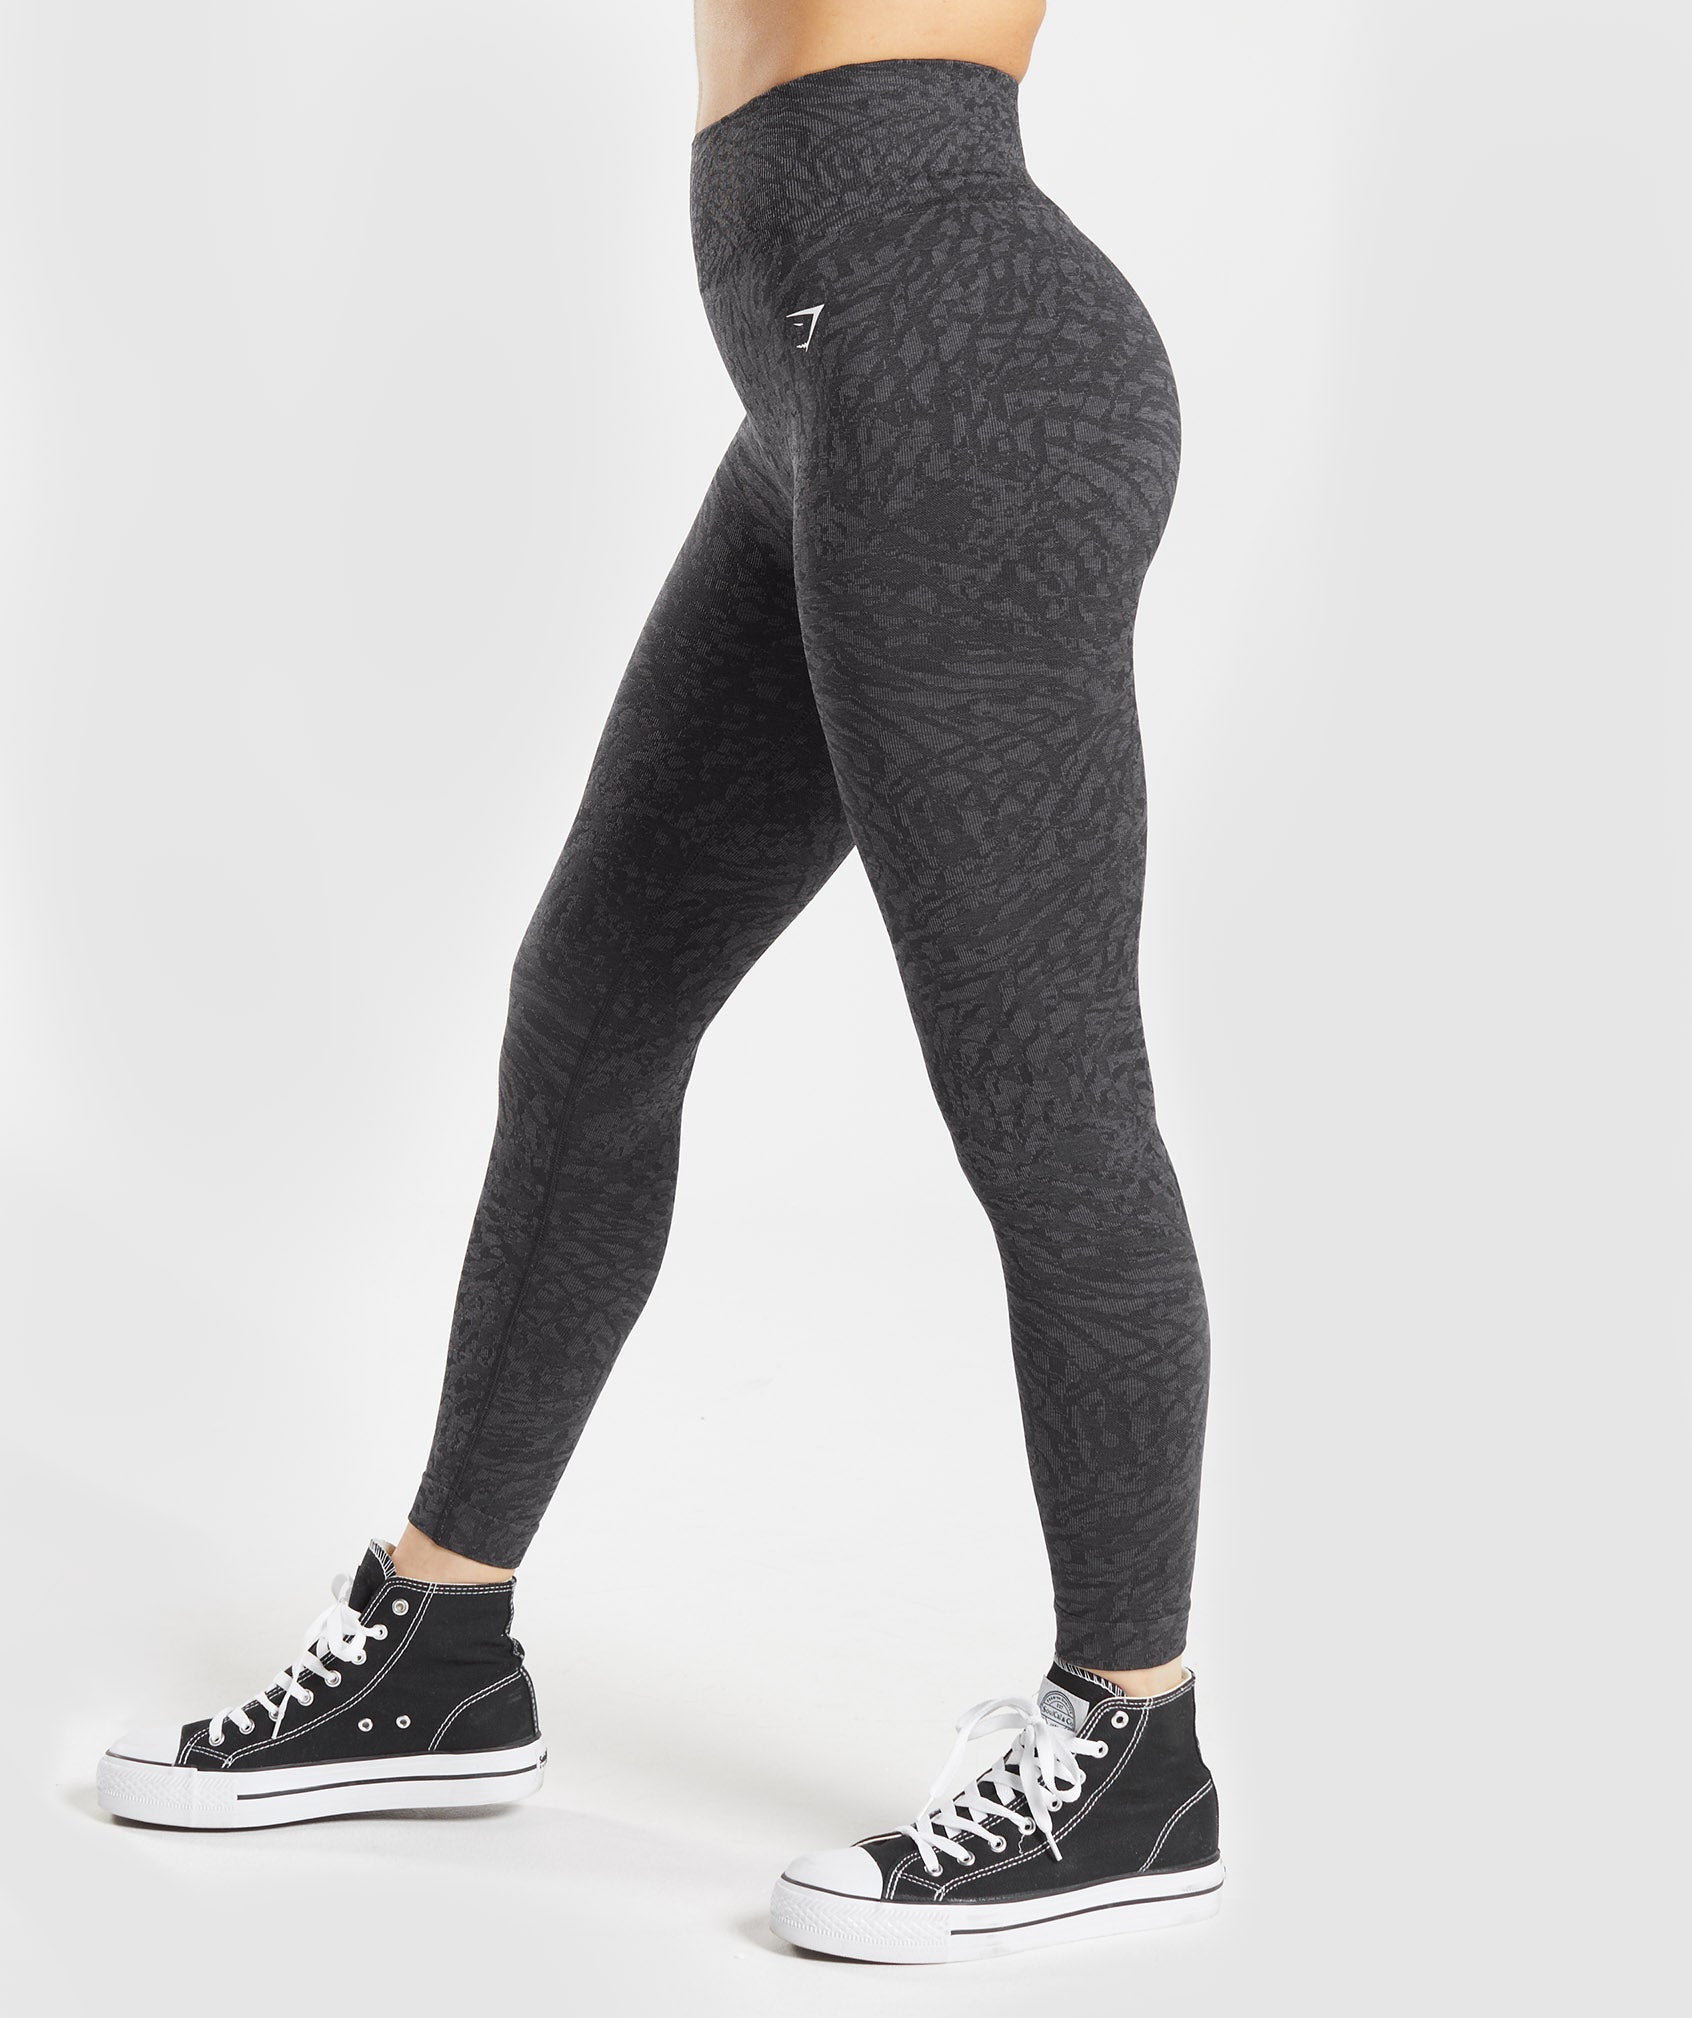 Gymshark Adapt Ombre Seamless Leggings XS Black, Women's Fashion